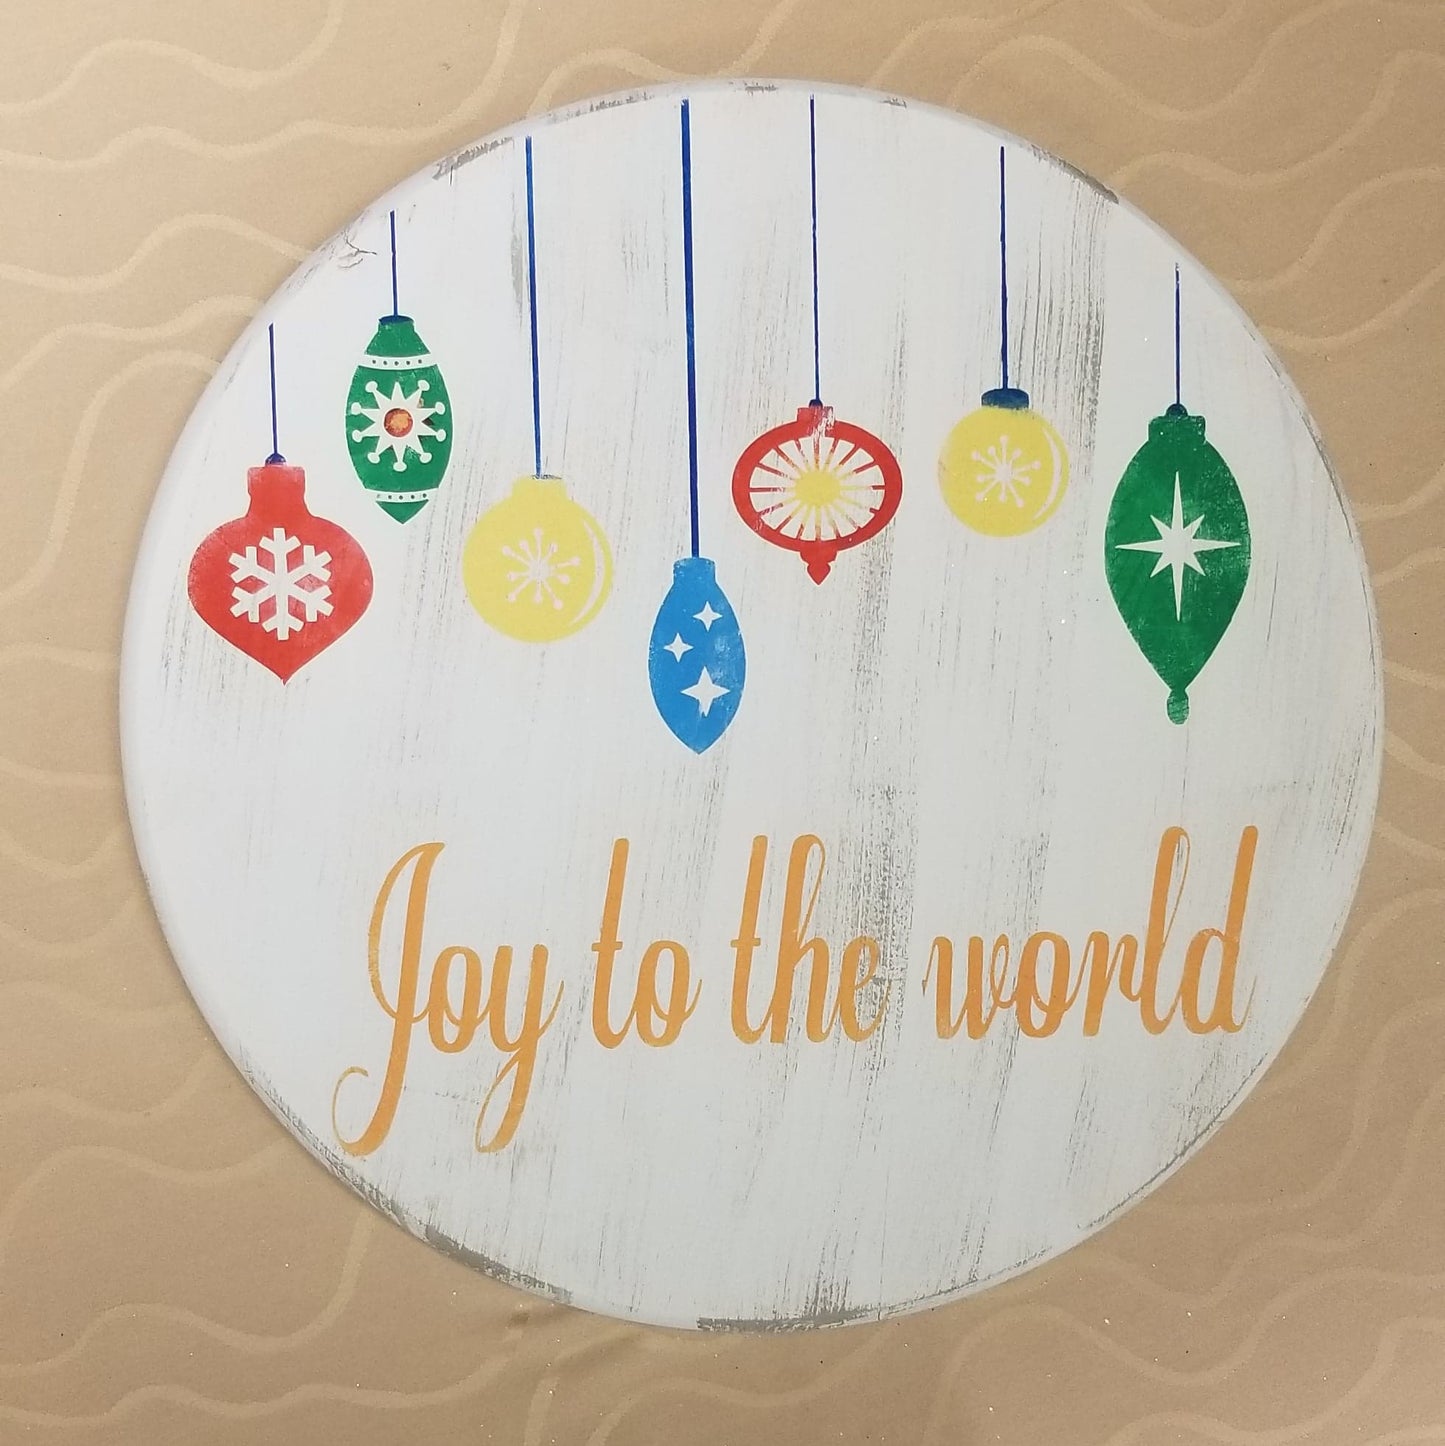 Joy to the world: Round A1332N